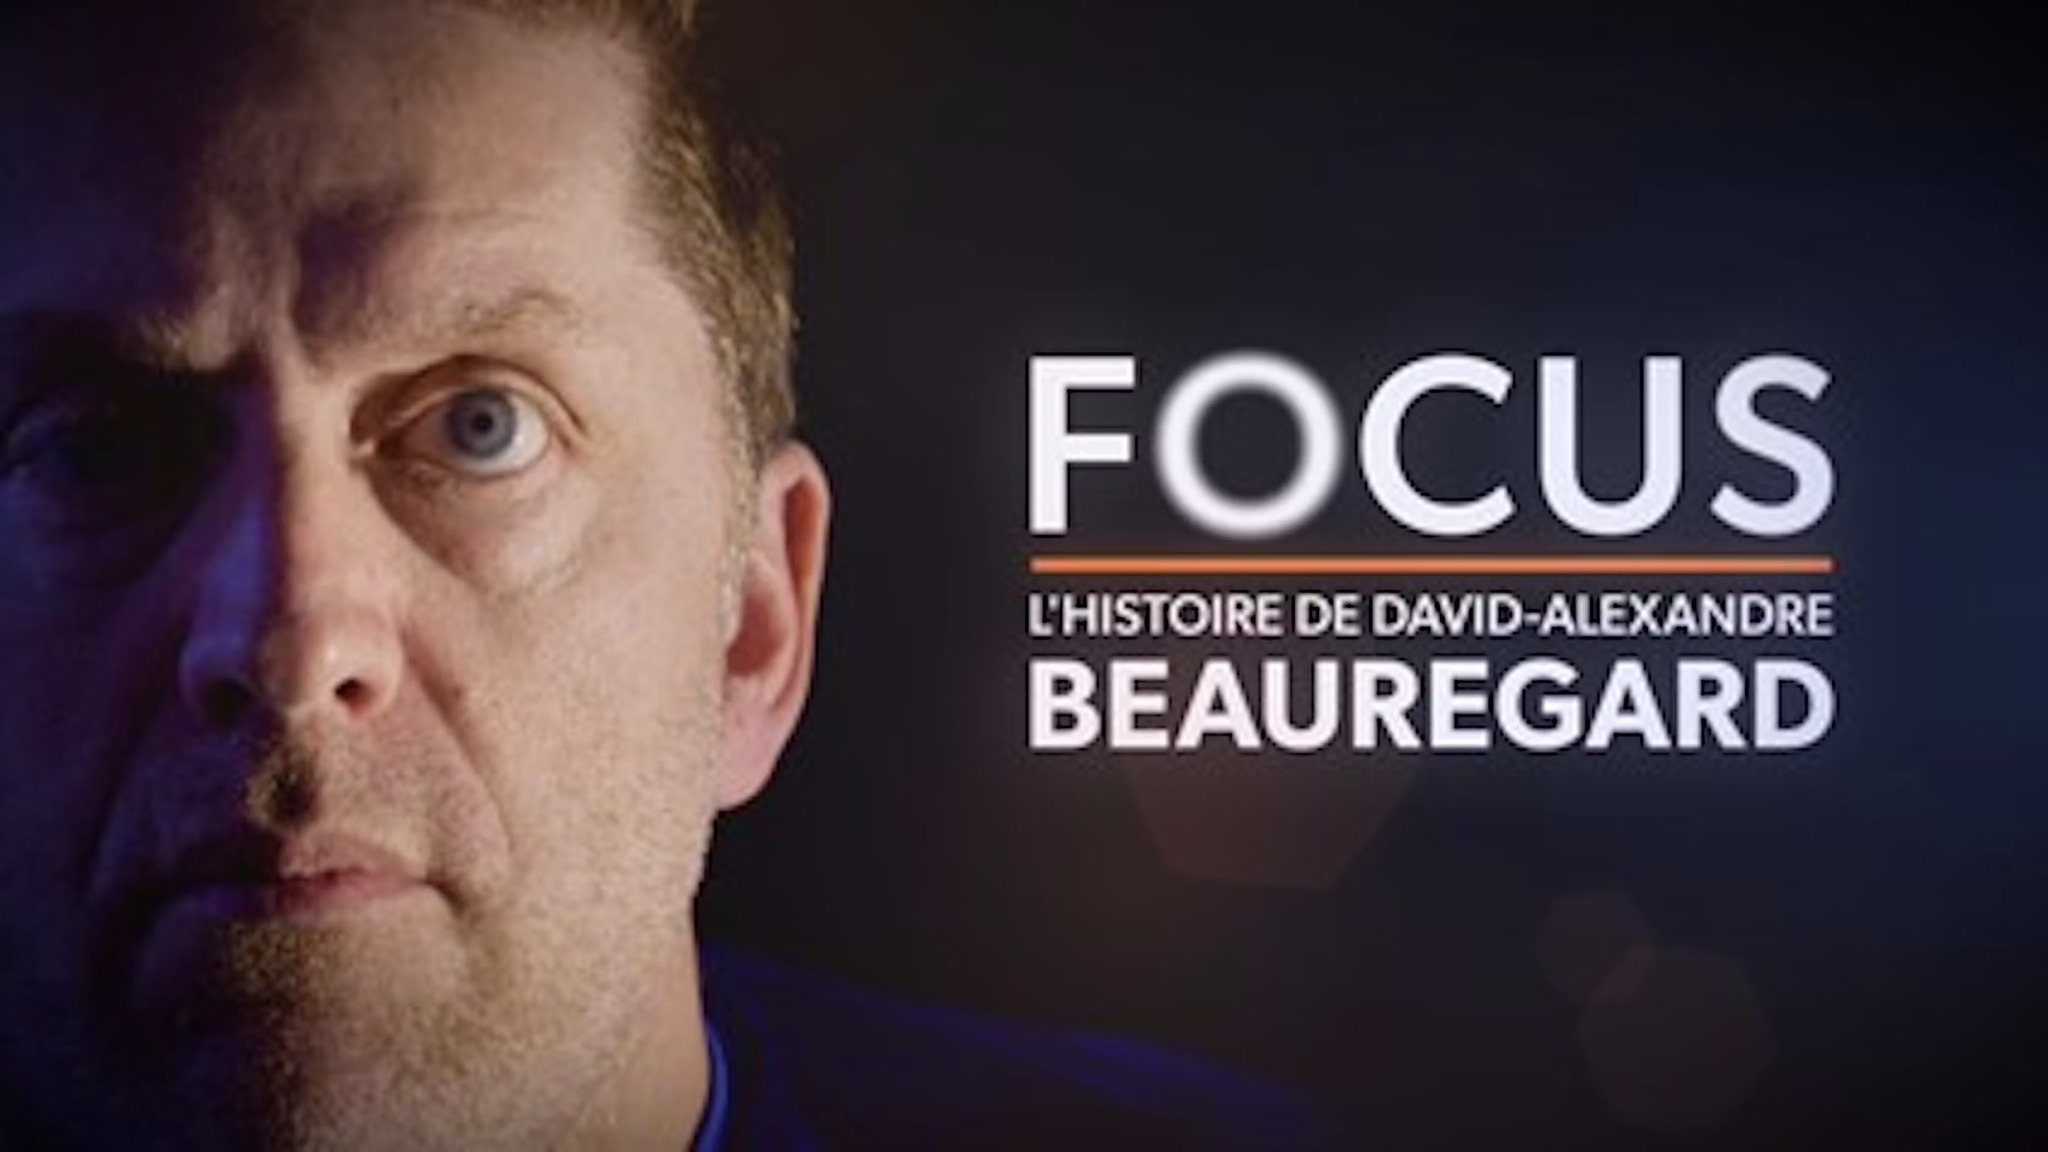 25 years of emotion: Focus, the story of David-Alexandre Beauregard